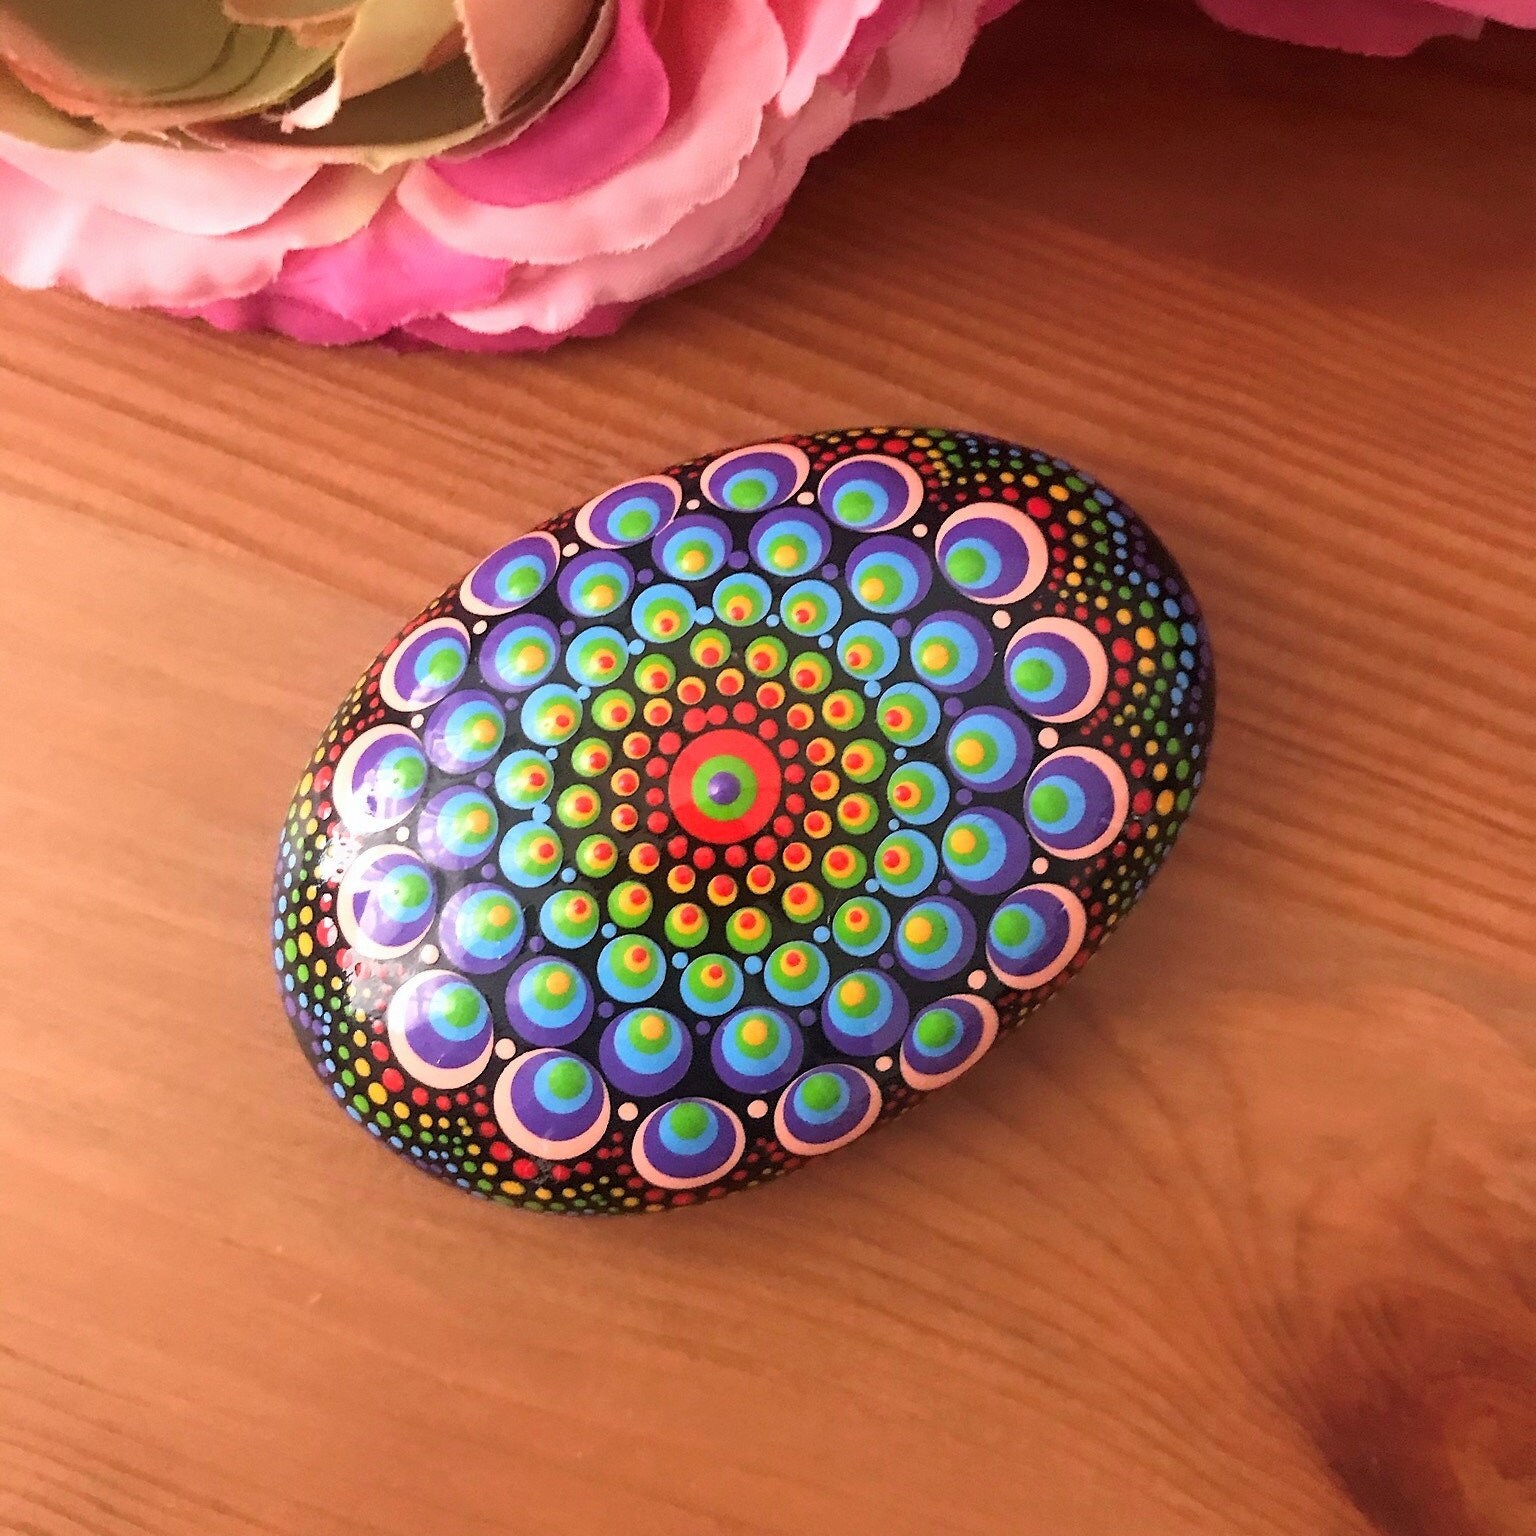 Hand-painted Stone in Mandala Dotart Design and Rainbow | Etsy